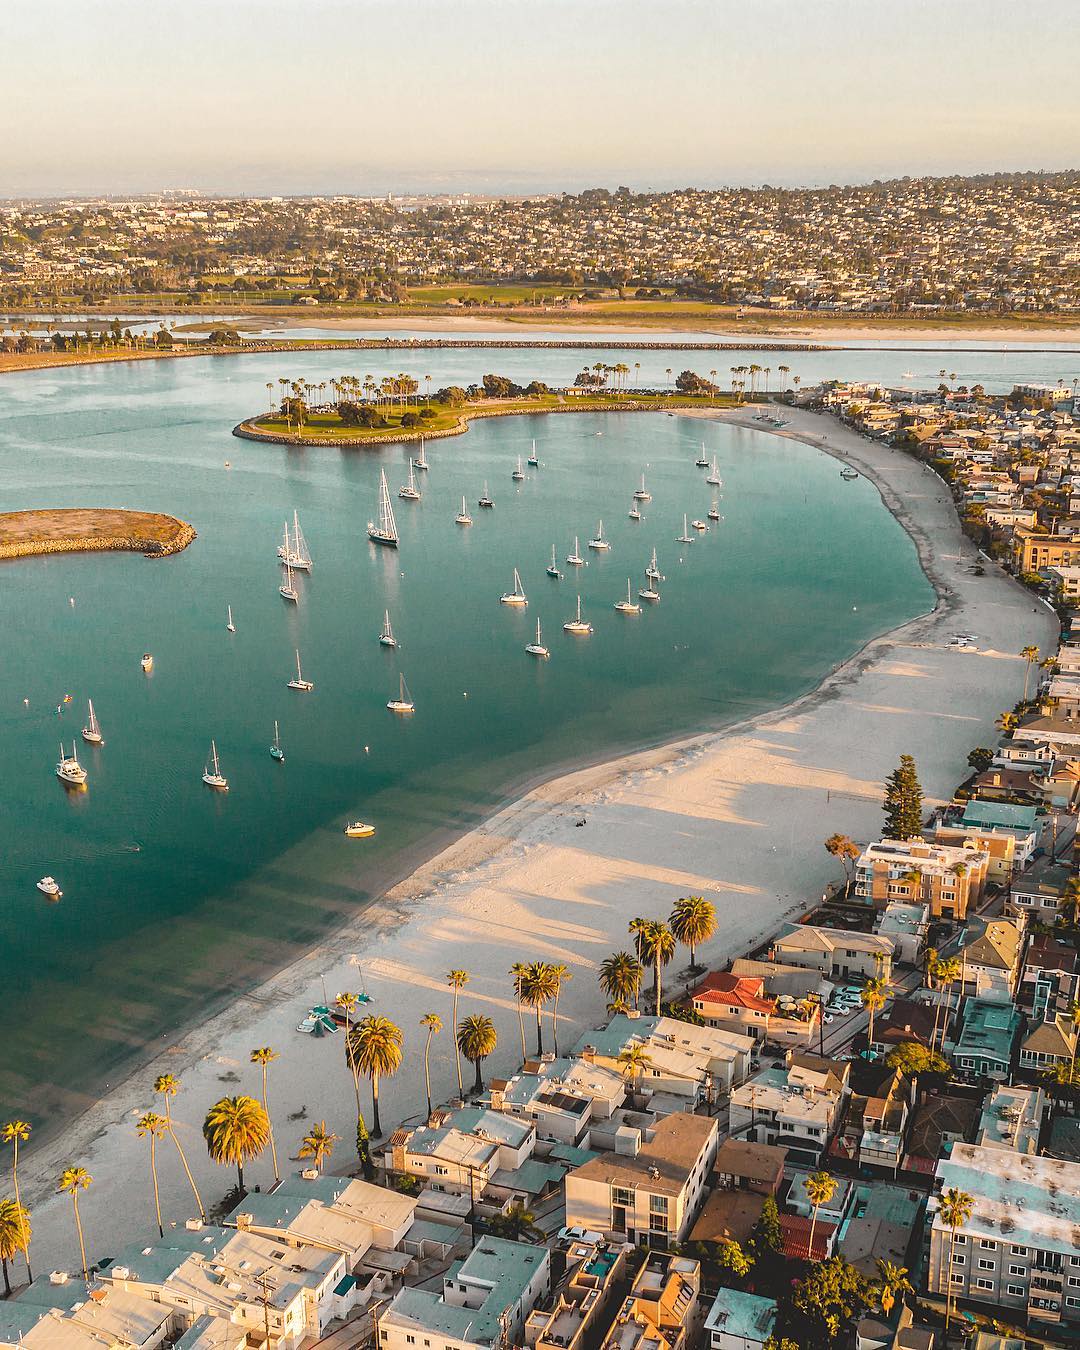 Mission Bay in San Diego, CA. Photo by Instagram user @adamhahn